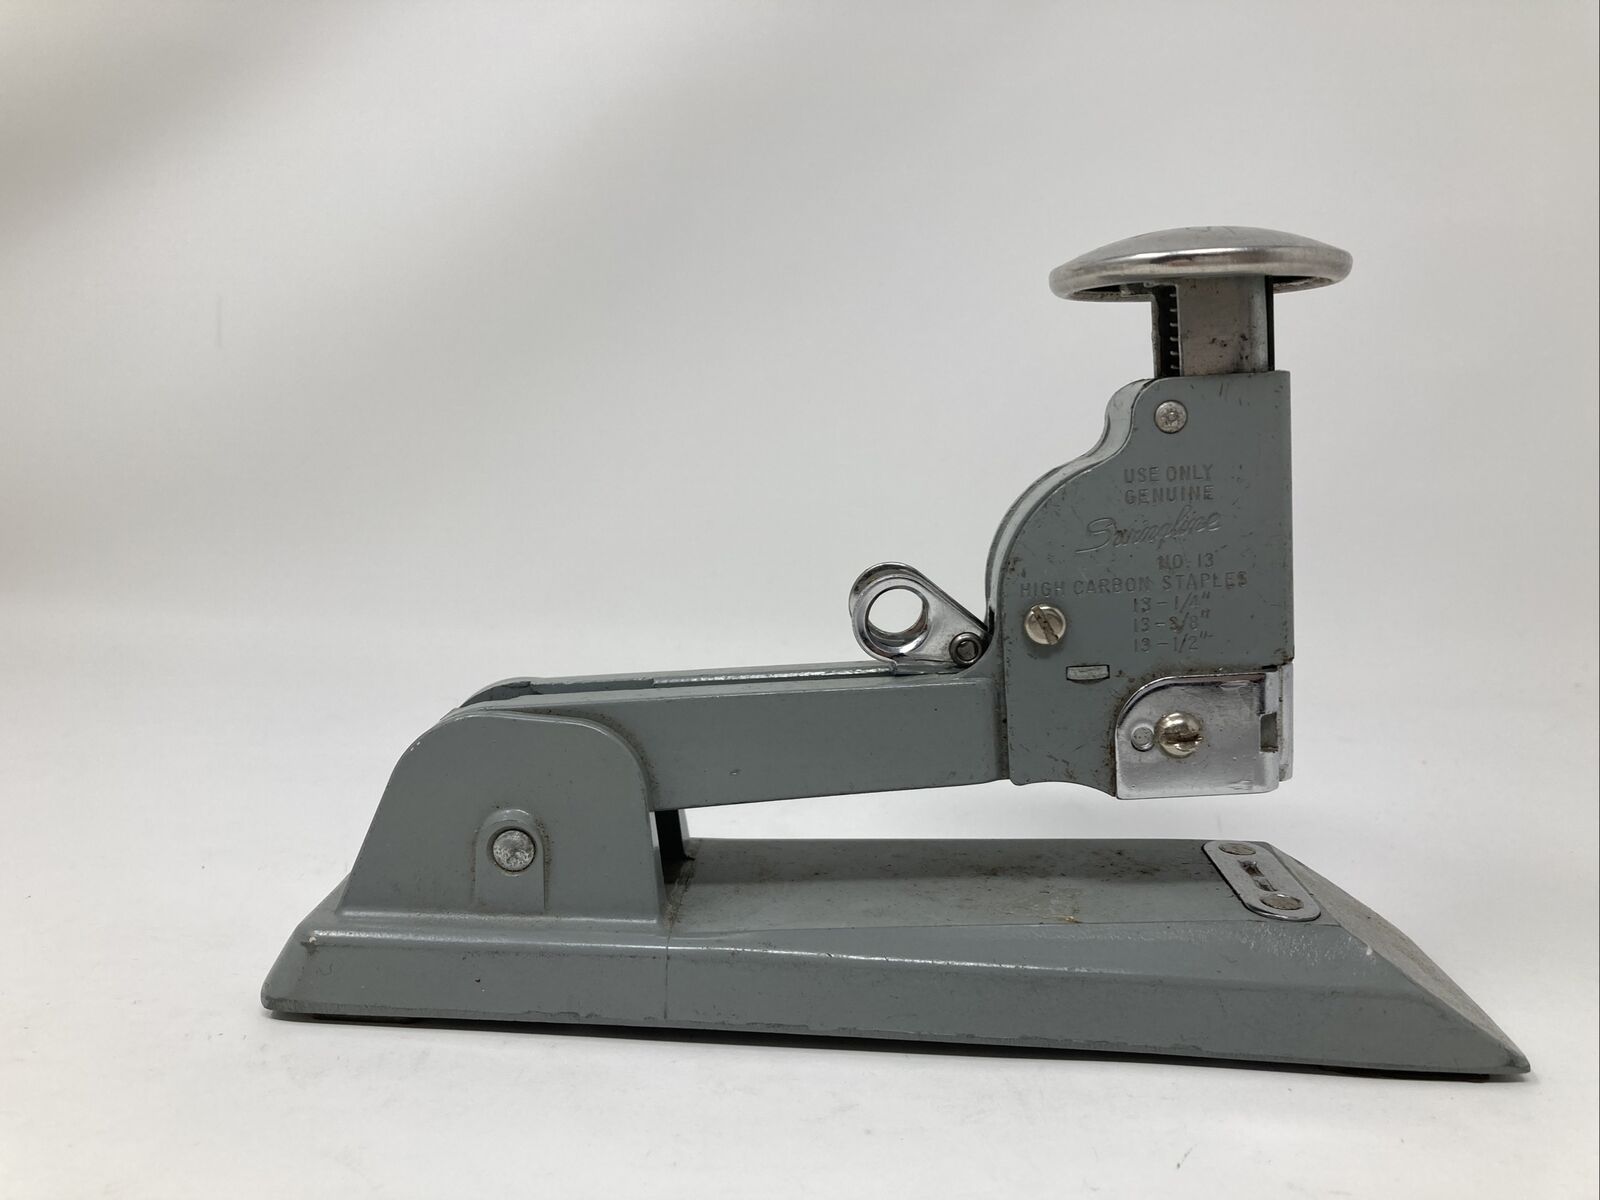 Vintage Swingline Heavy Duty Stapler No. 13 - Made in USA